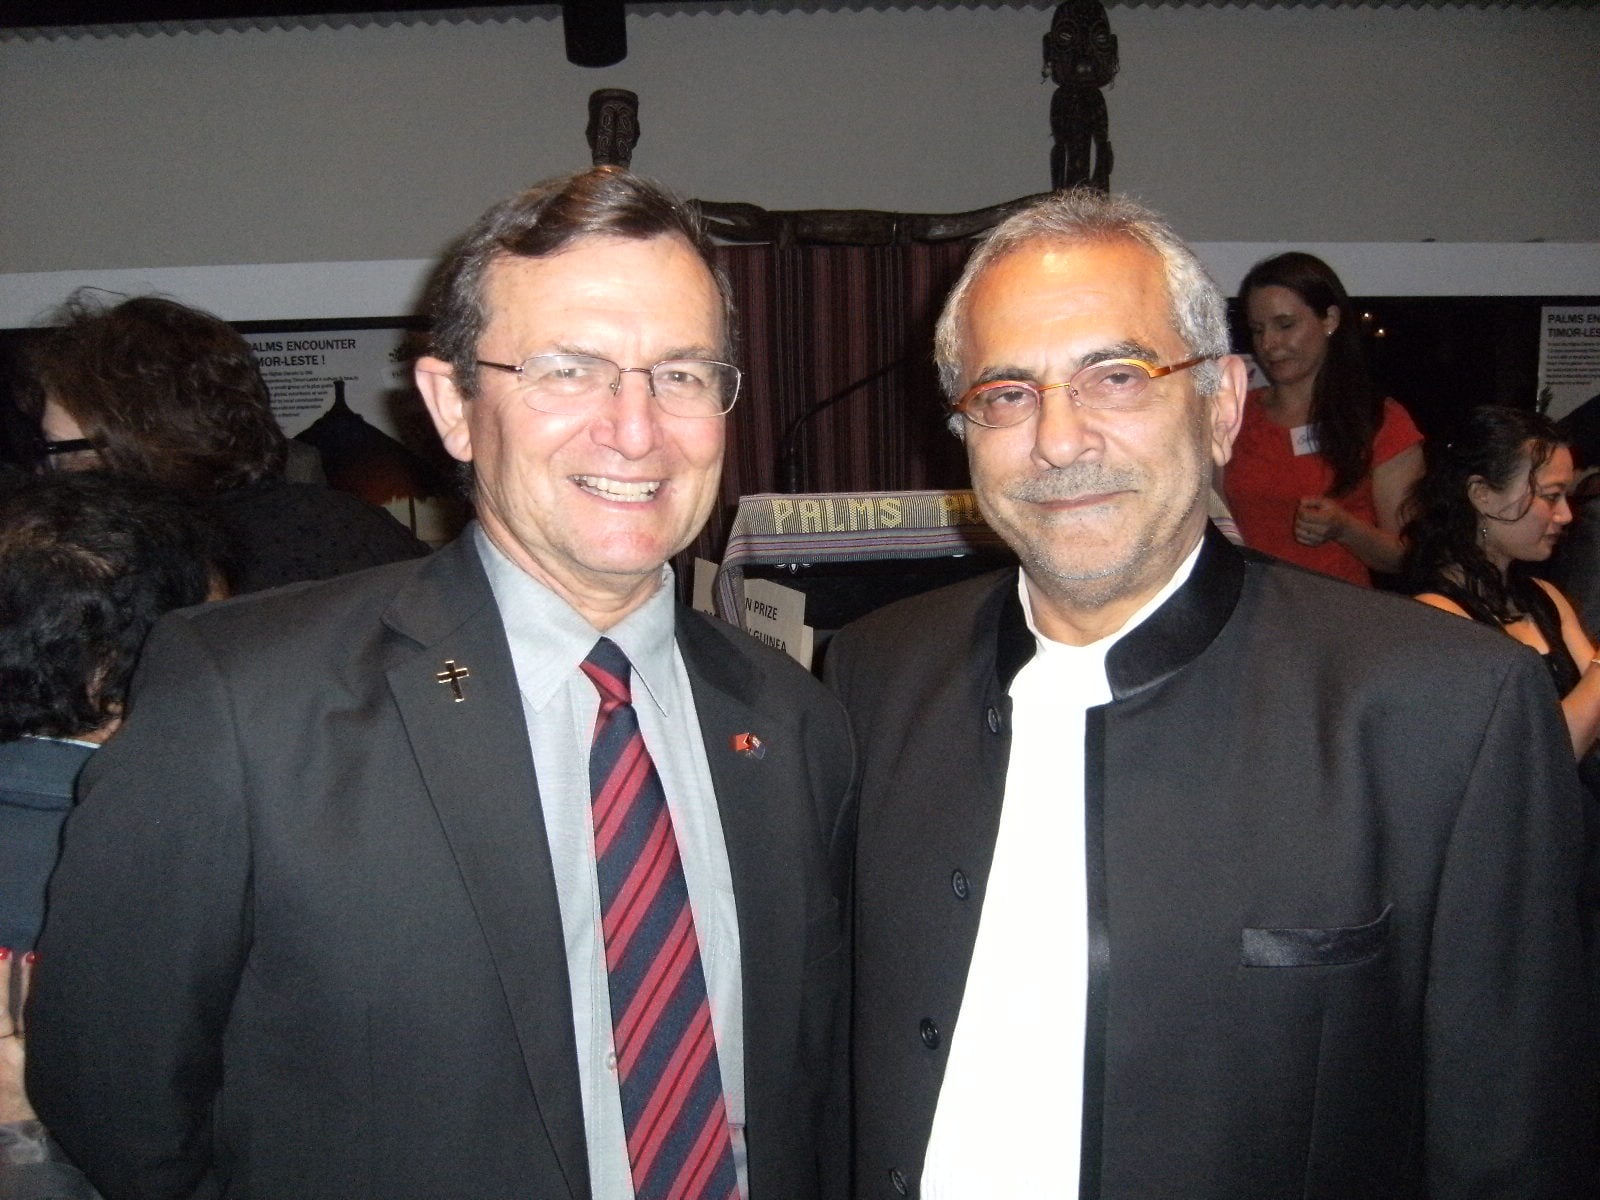 Gary with Former East Timor President Jose Ramos Horta